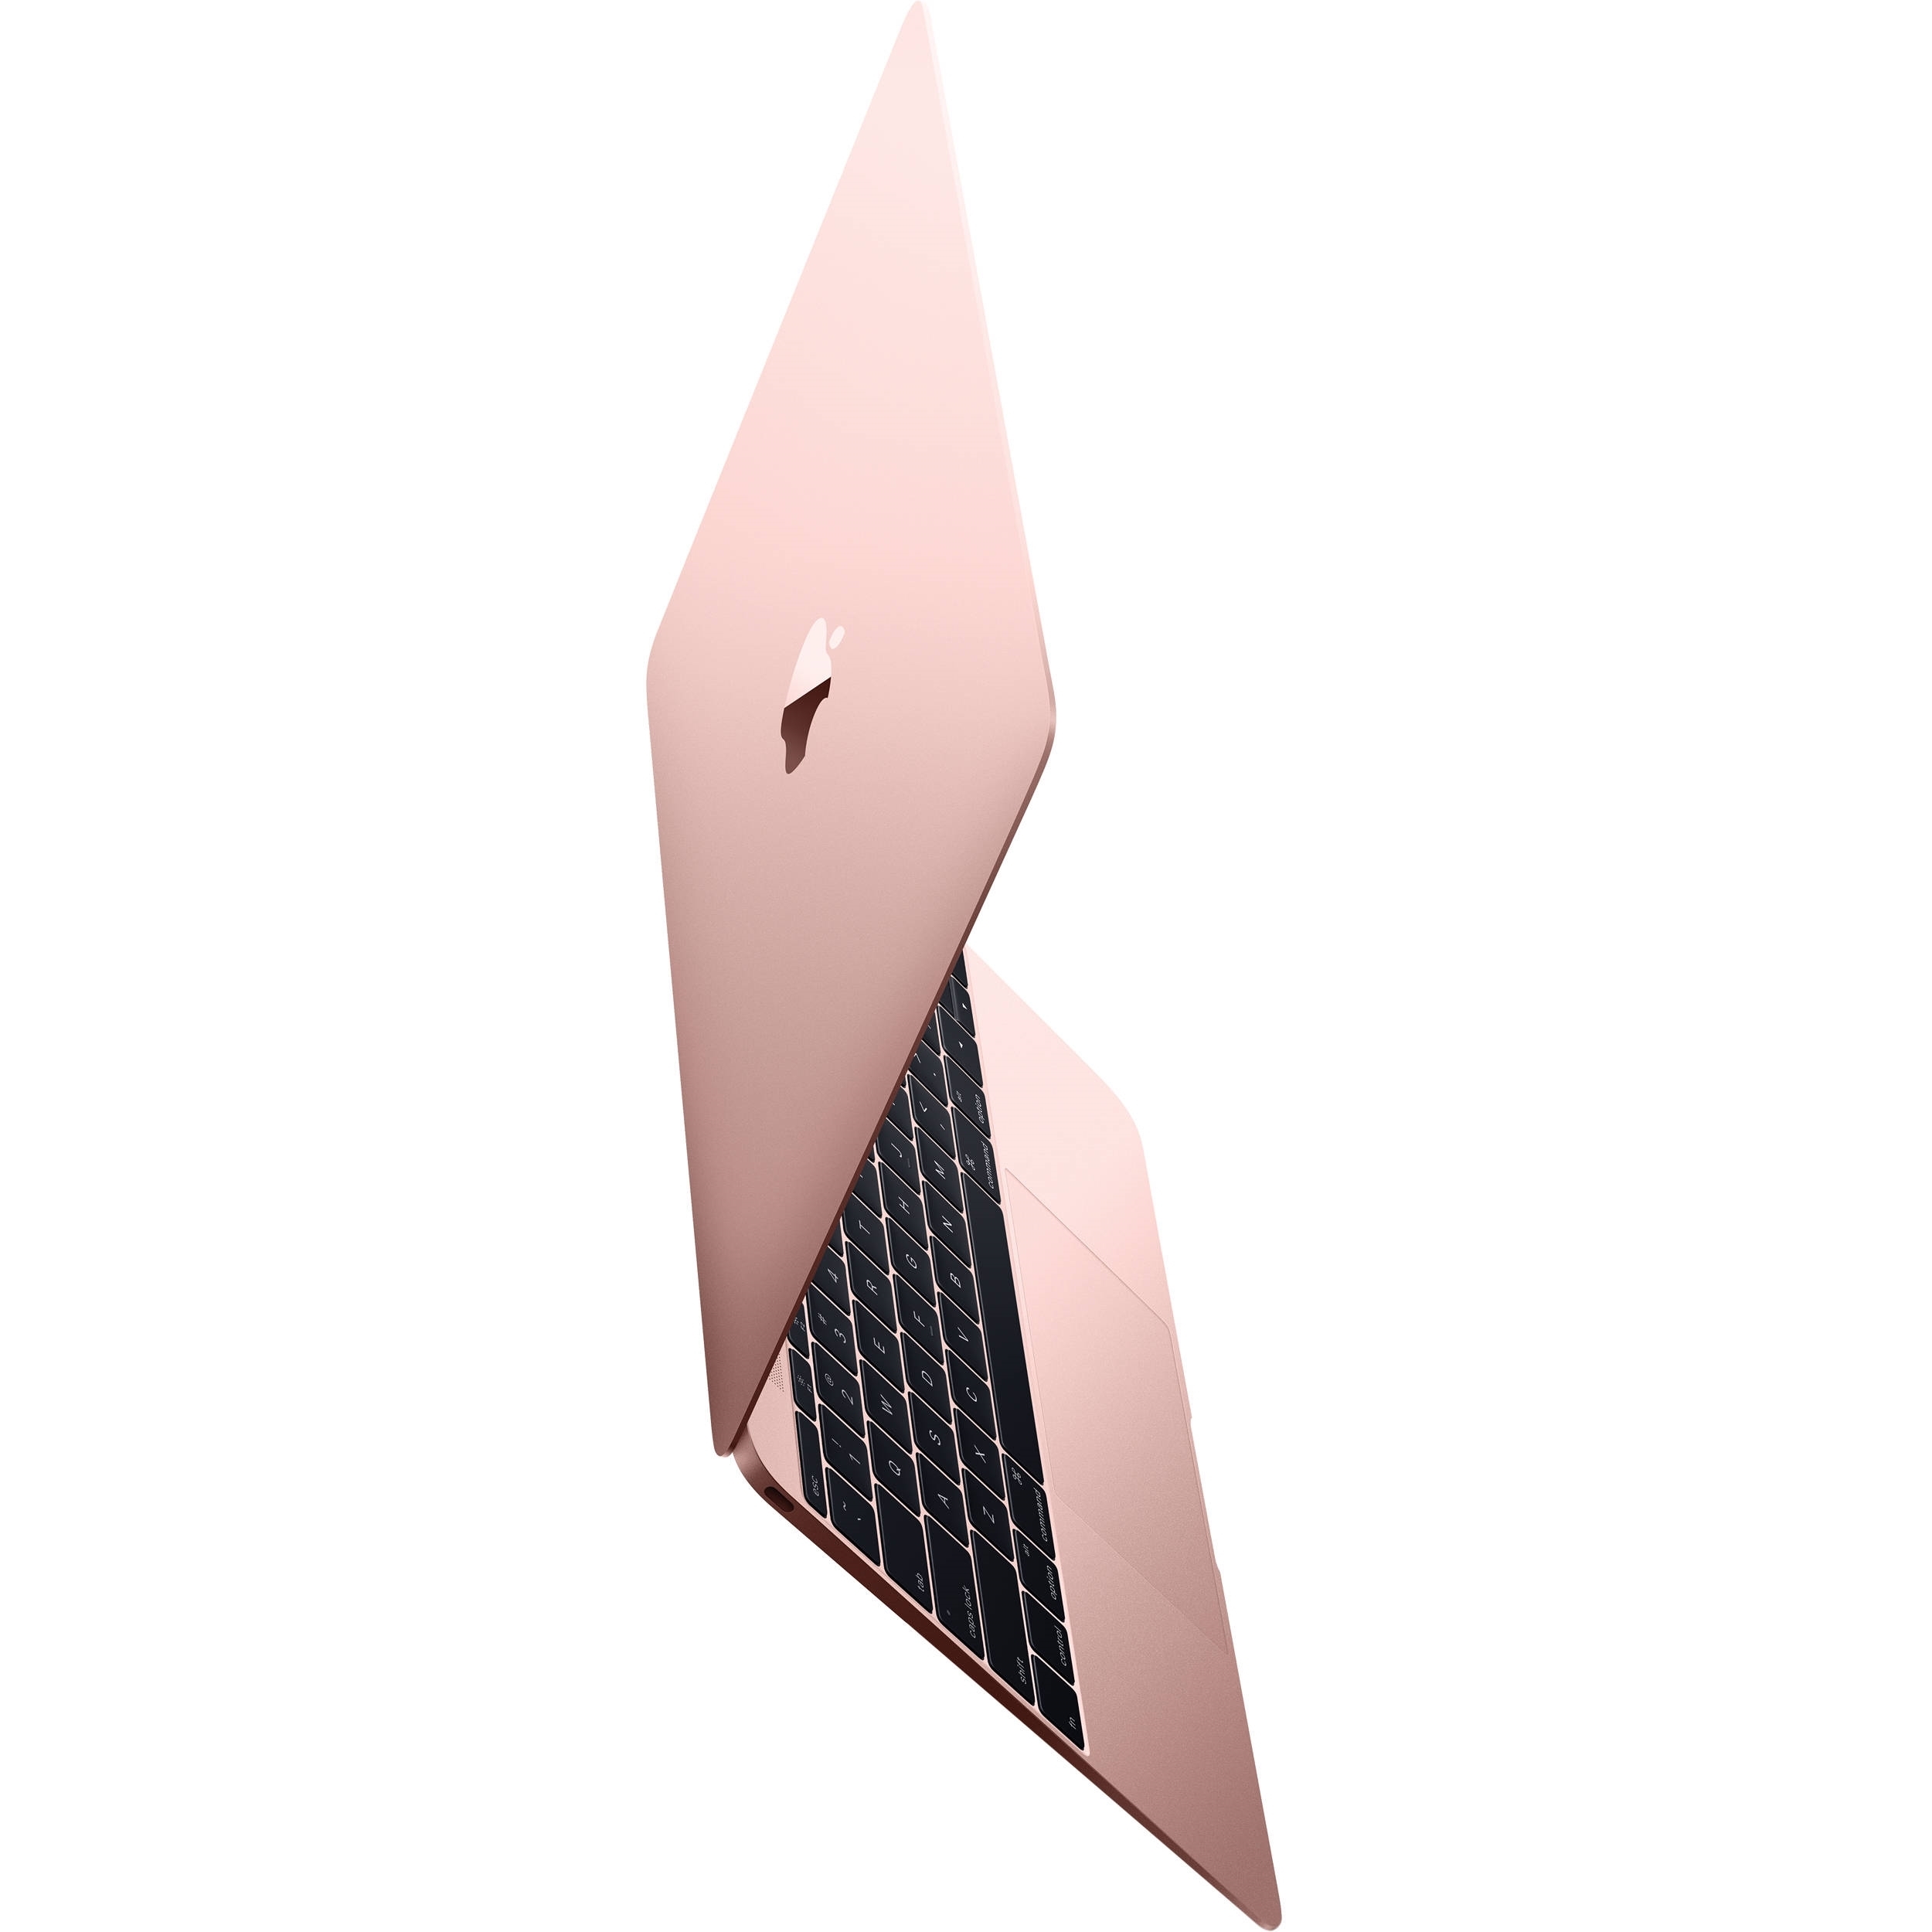 Ithaca juni Vermeend Apple MacBook MMGL2LLA Intel Core M3-6Y30 X2 1.1GHz | Ubuy Brazil